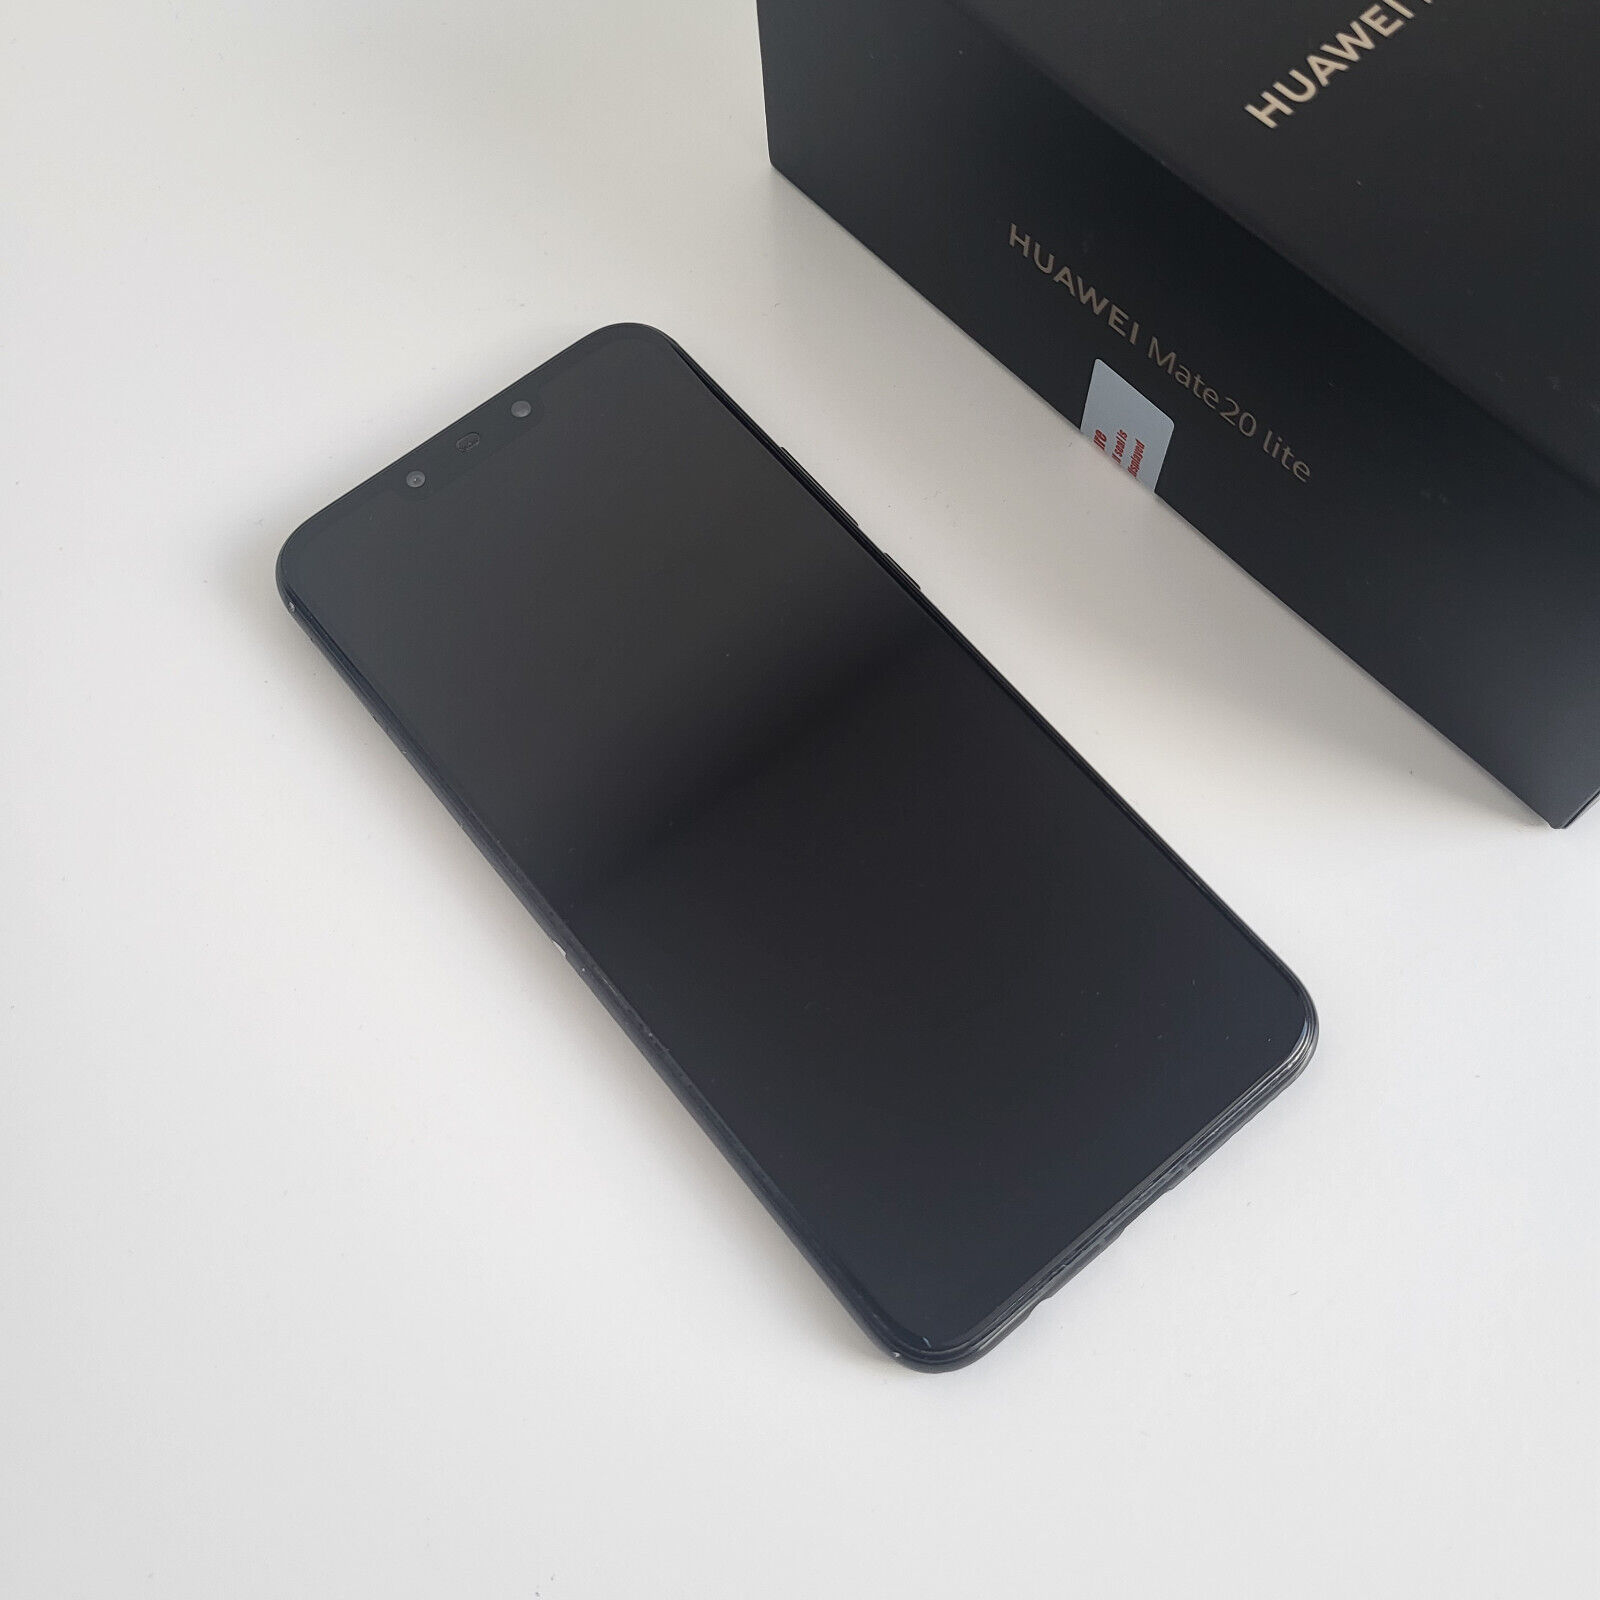 Huawei Mate 20 Lite 64GB zwart 4GB RAM Android ontgrendelde versie smartphone dubbele simkaart